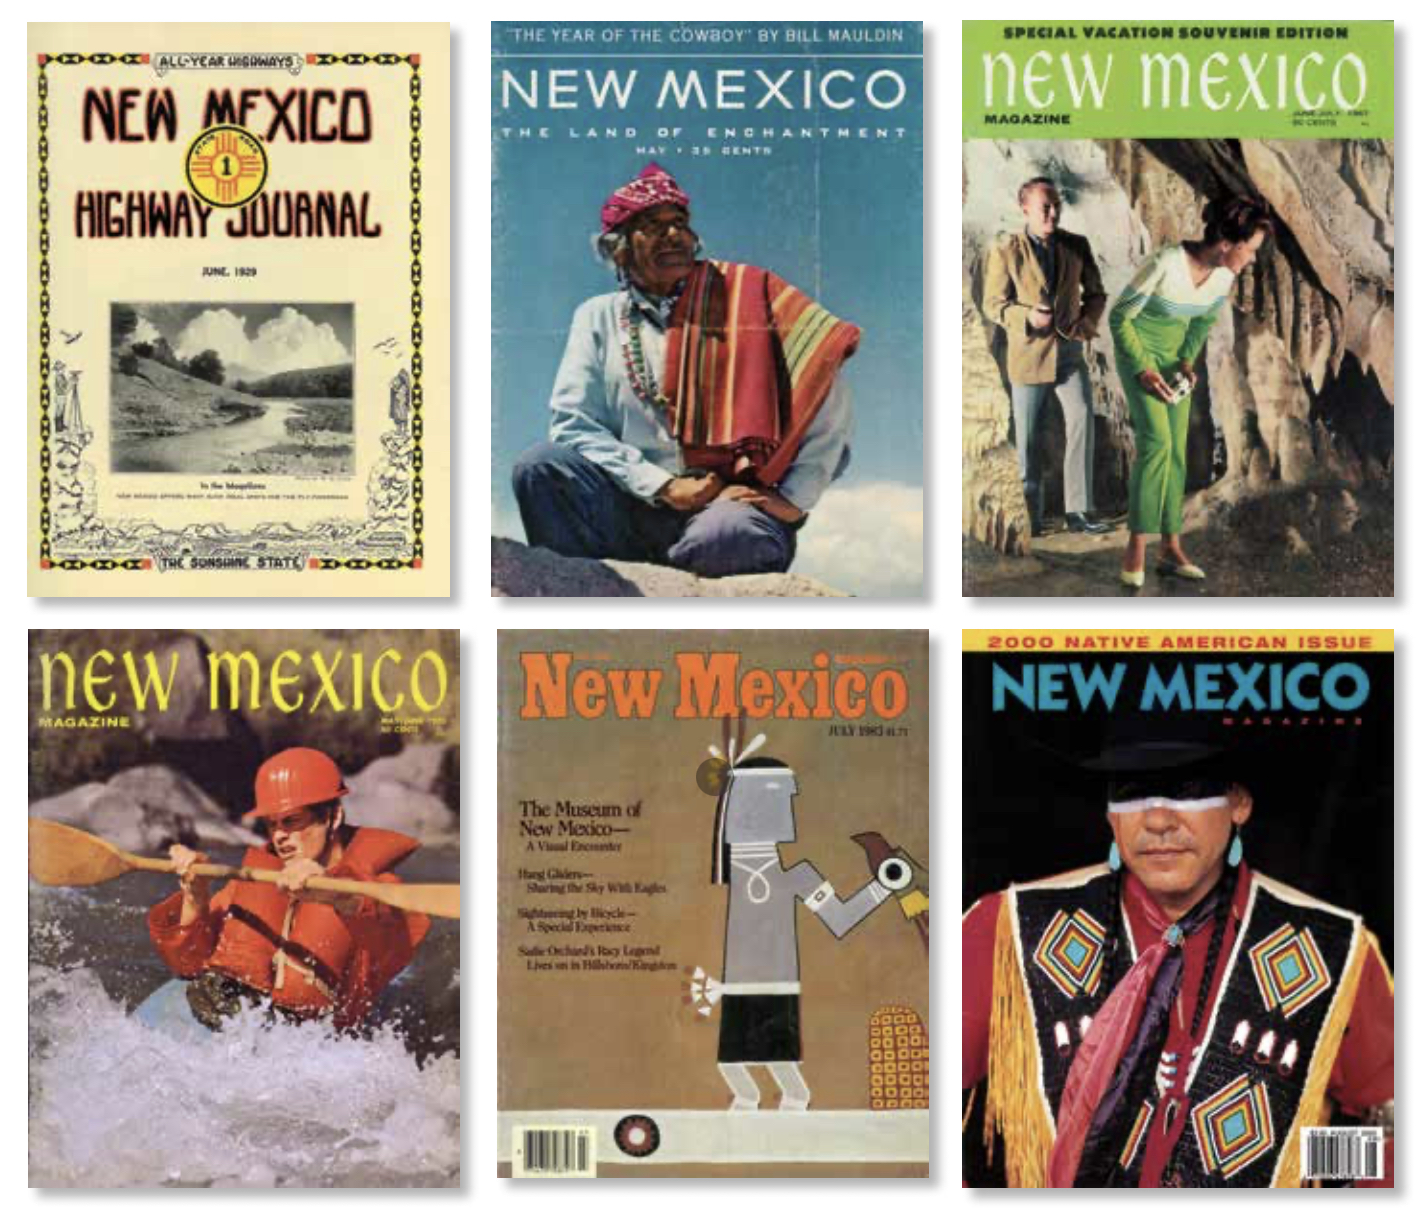 Member Day: Enchantorama! New Mexico Magazine Celebrates 100 Years